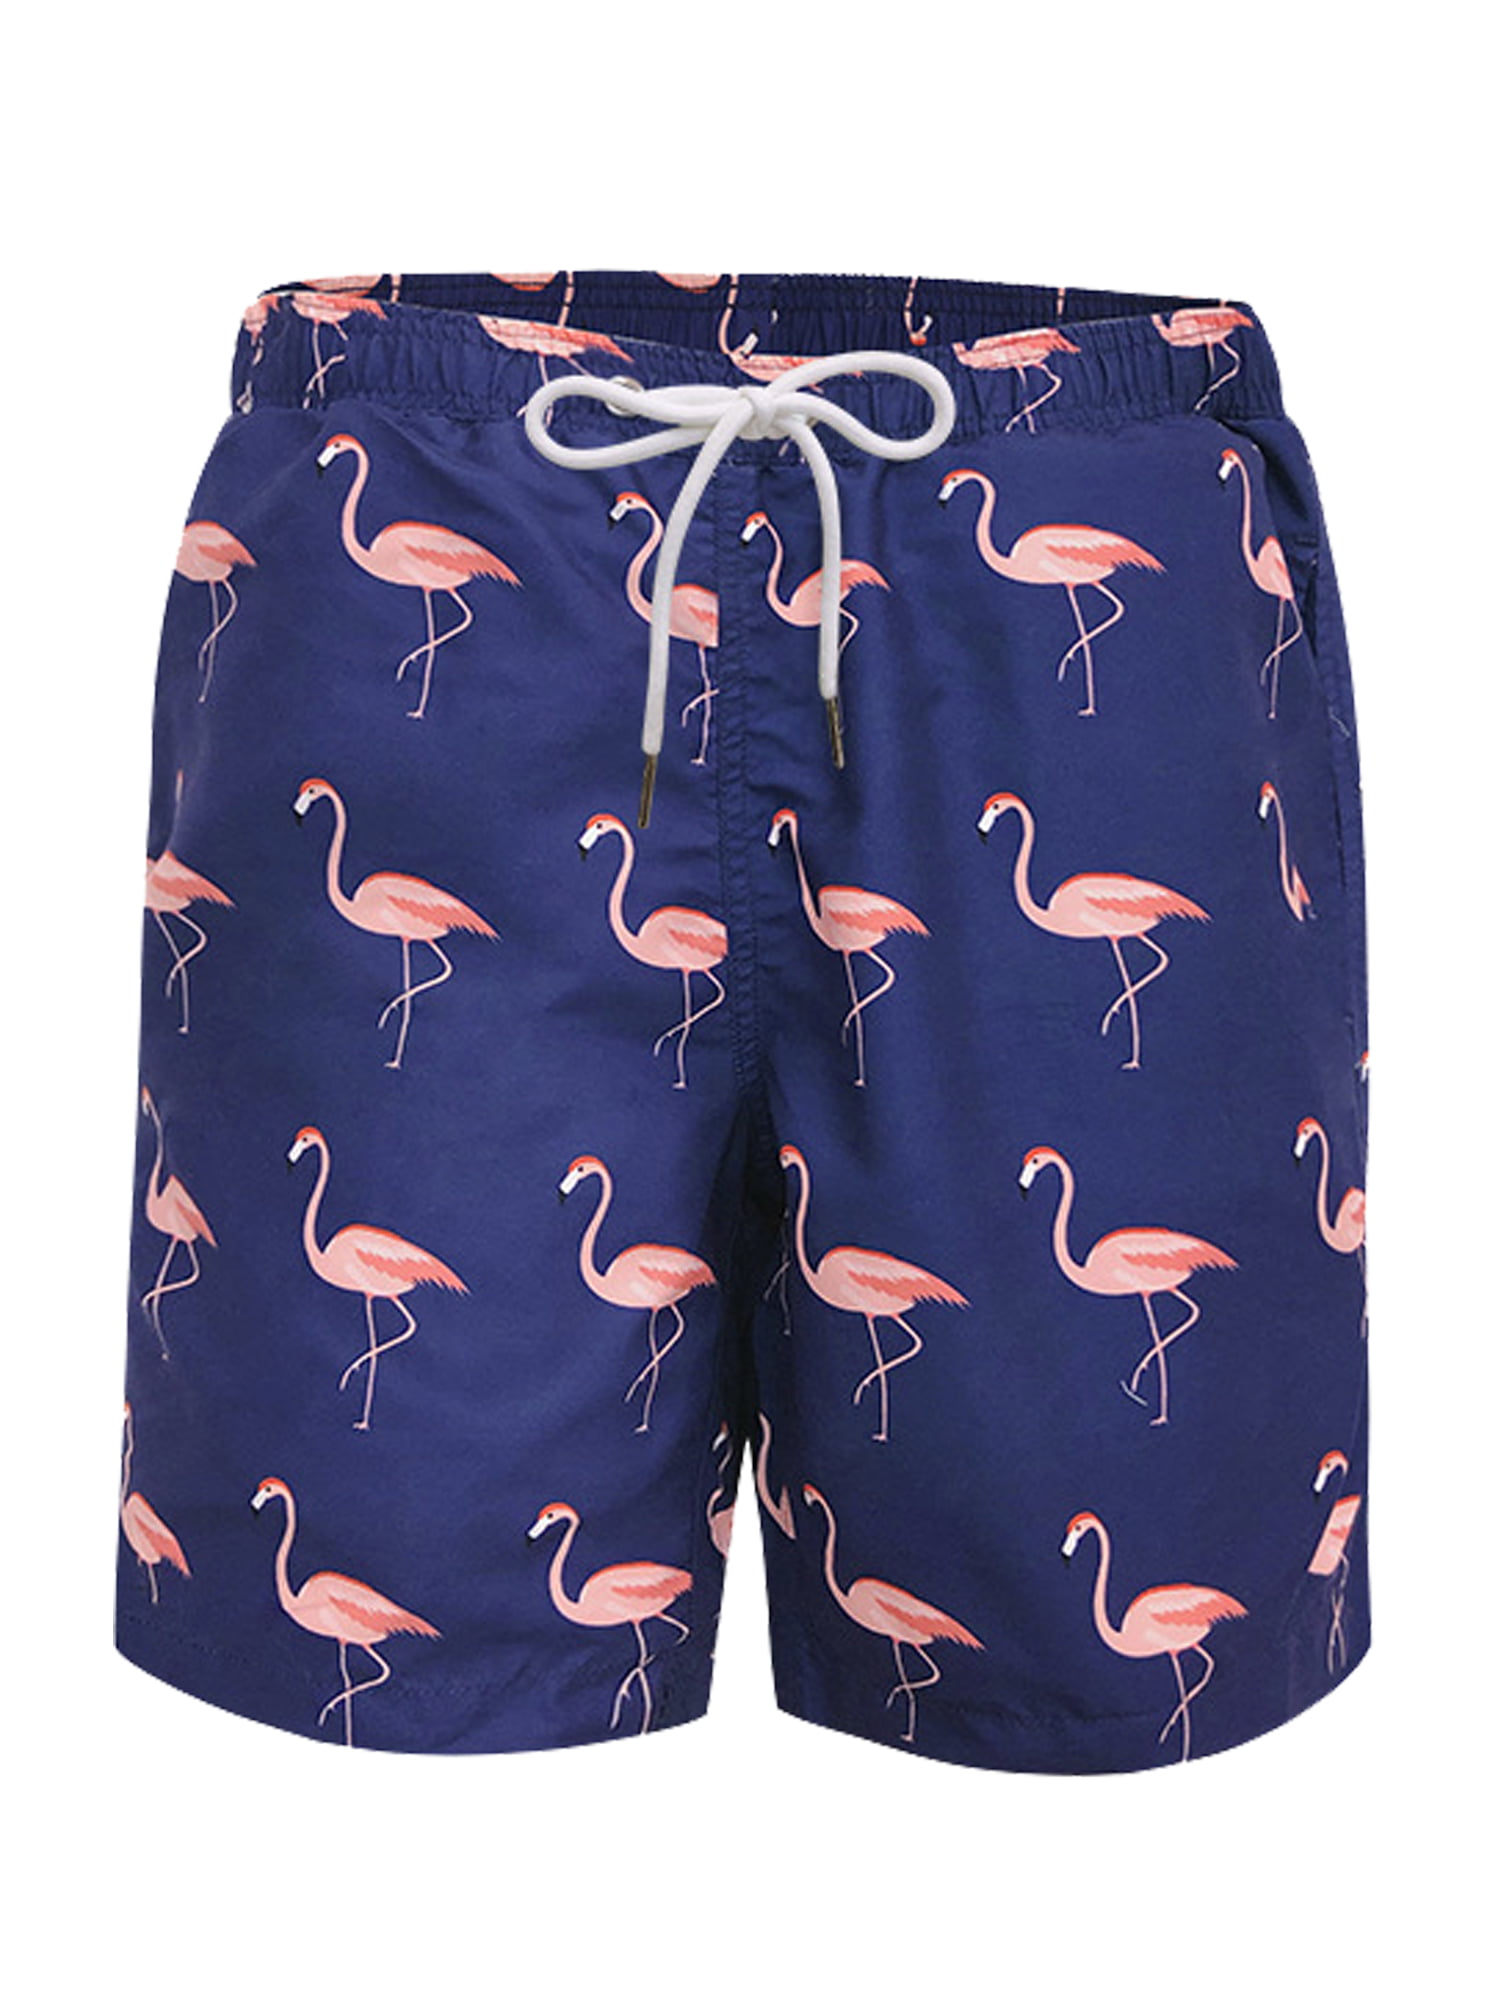 PIN Lightweight Quick Dry Colored Polygon Beach Shorts Swim Trunks Beach Pants